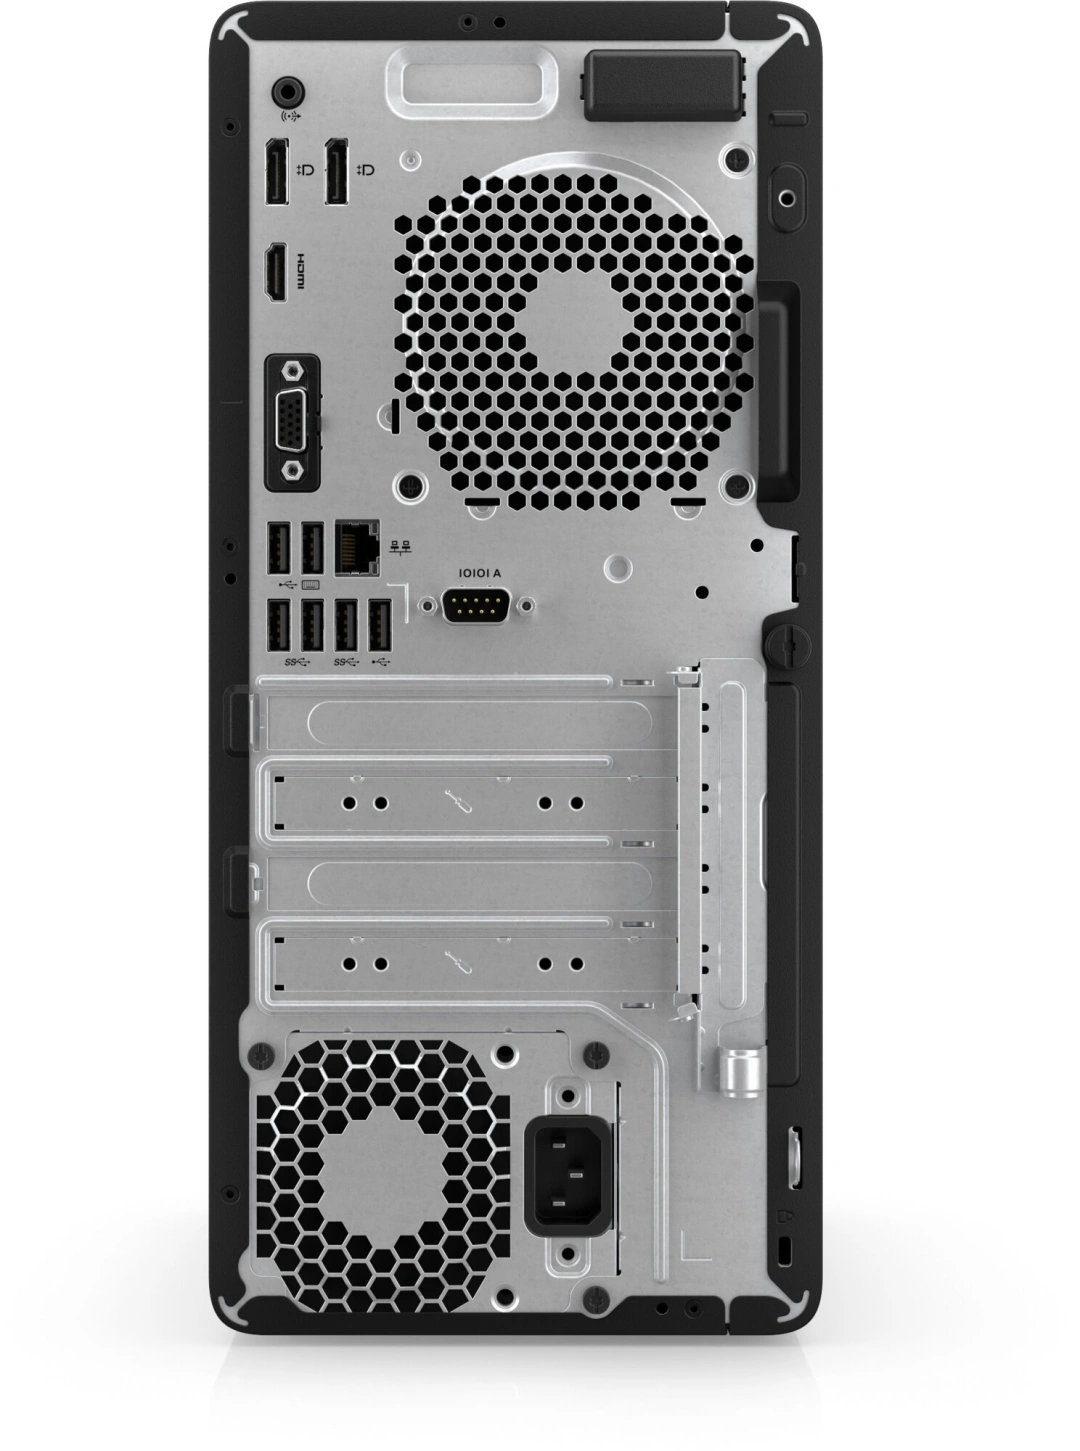 HP Elite Tower 800 G9, black (7B0X4EA)